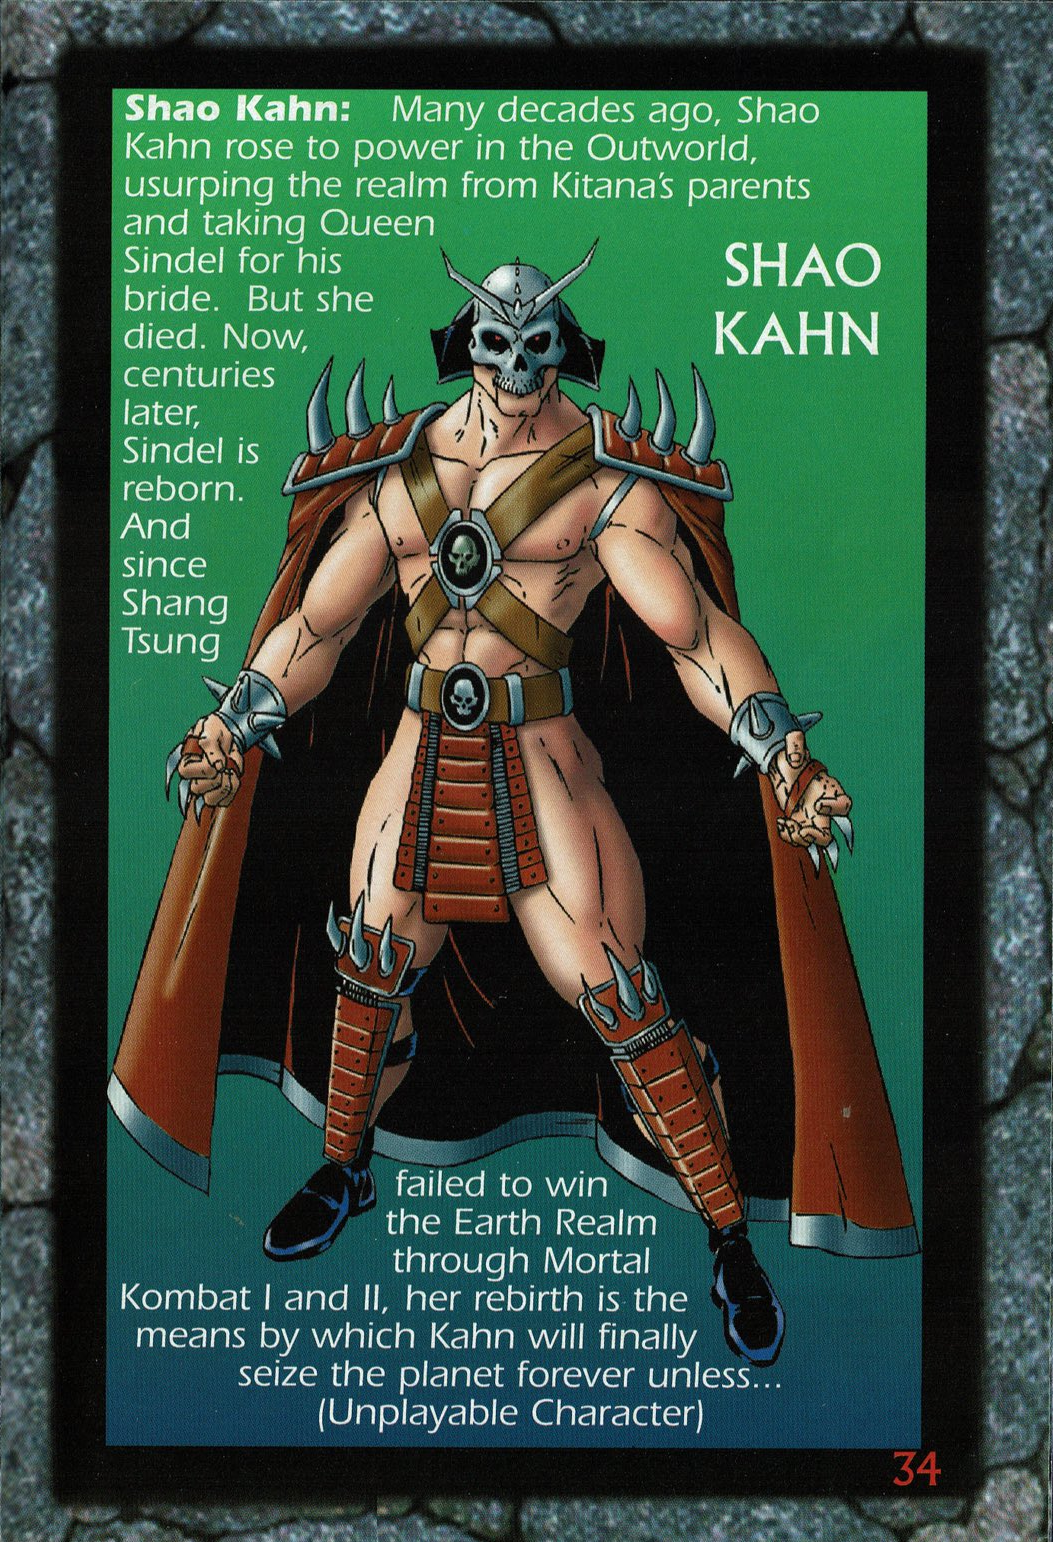 Kotal Kahn vs Shao Kahn  Mortal kombat art, Mortal kombat, Mortal kombat 3